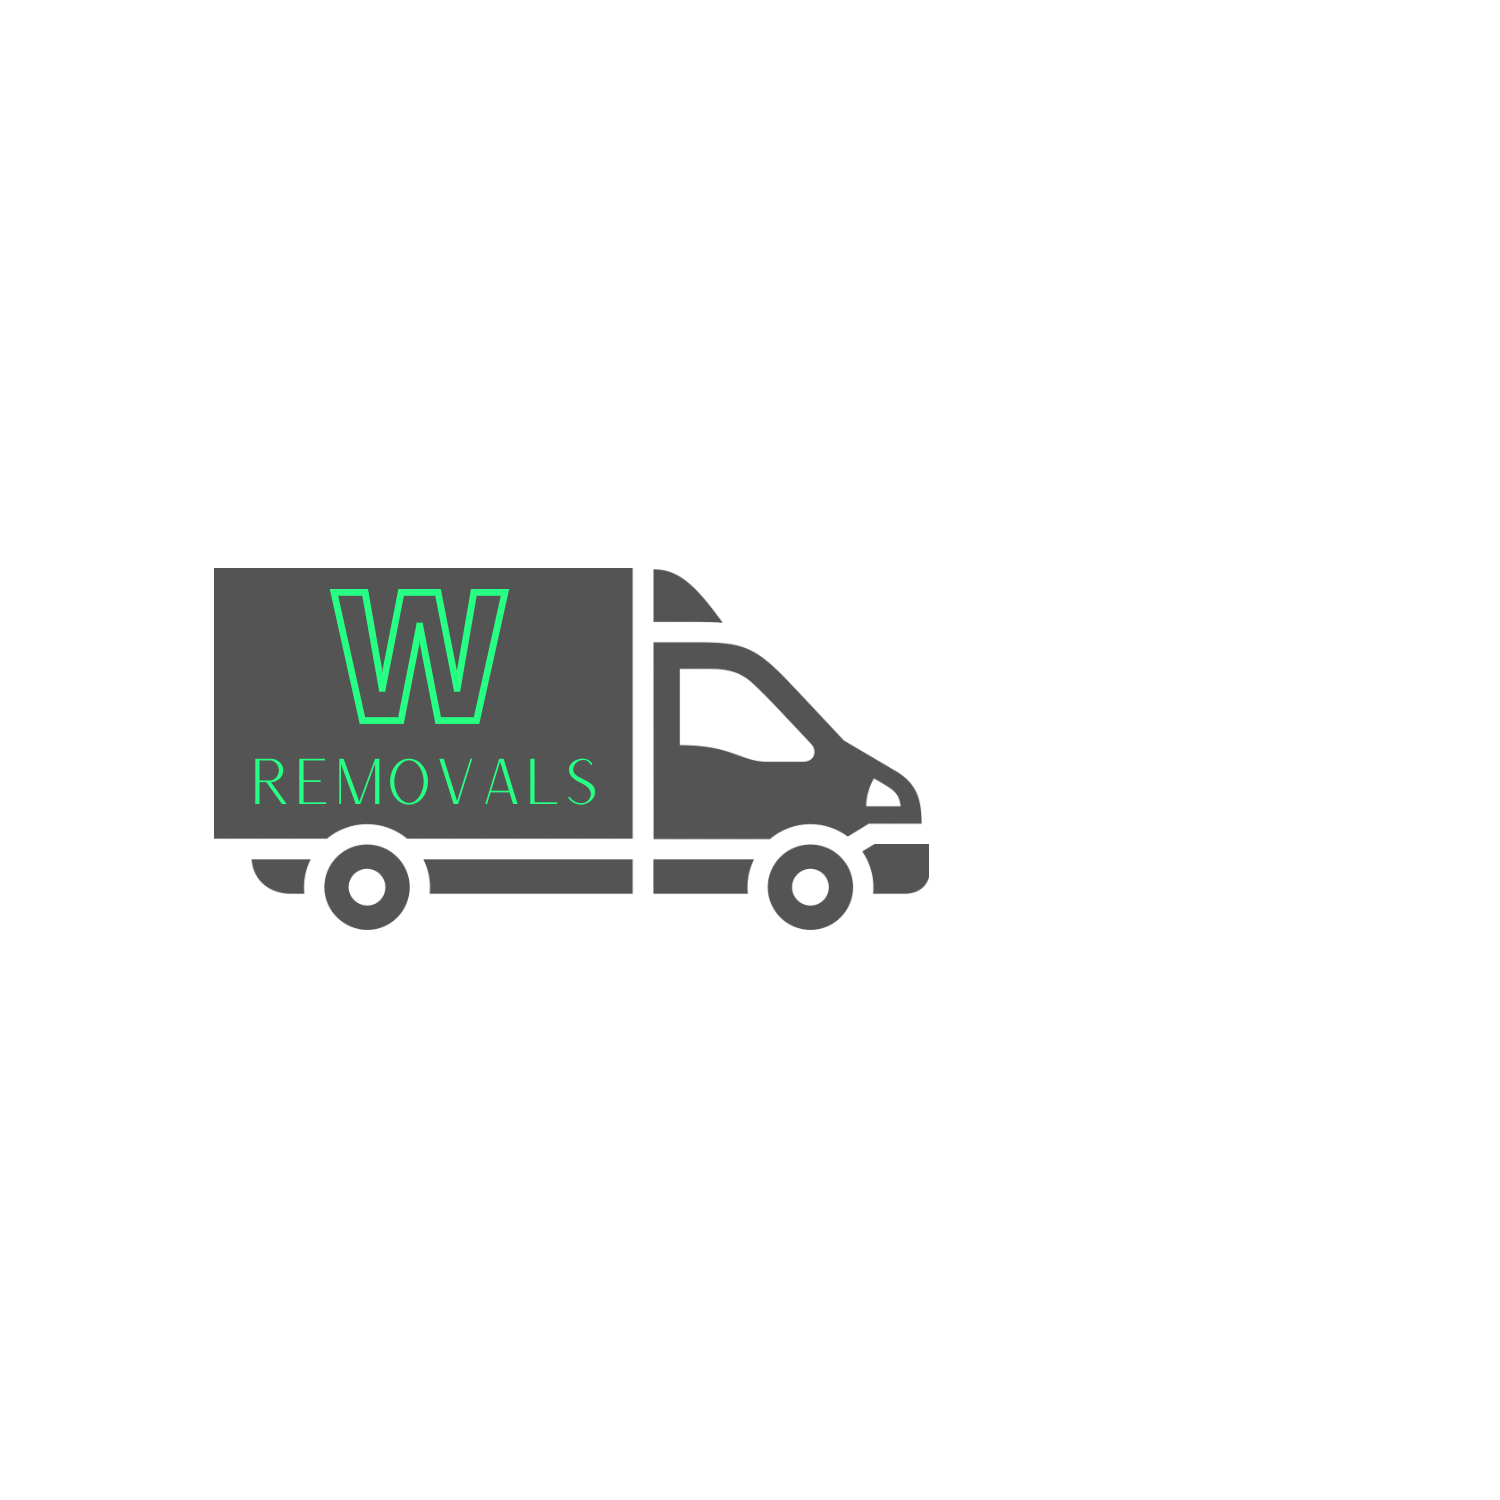 W Removals logo